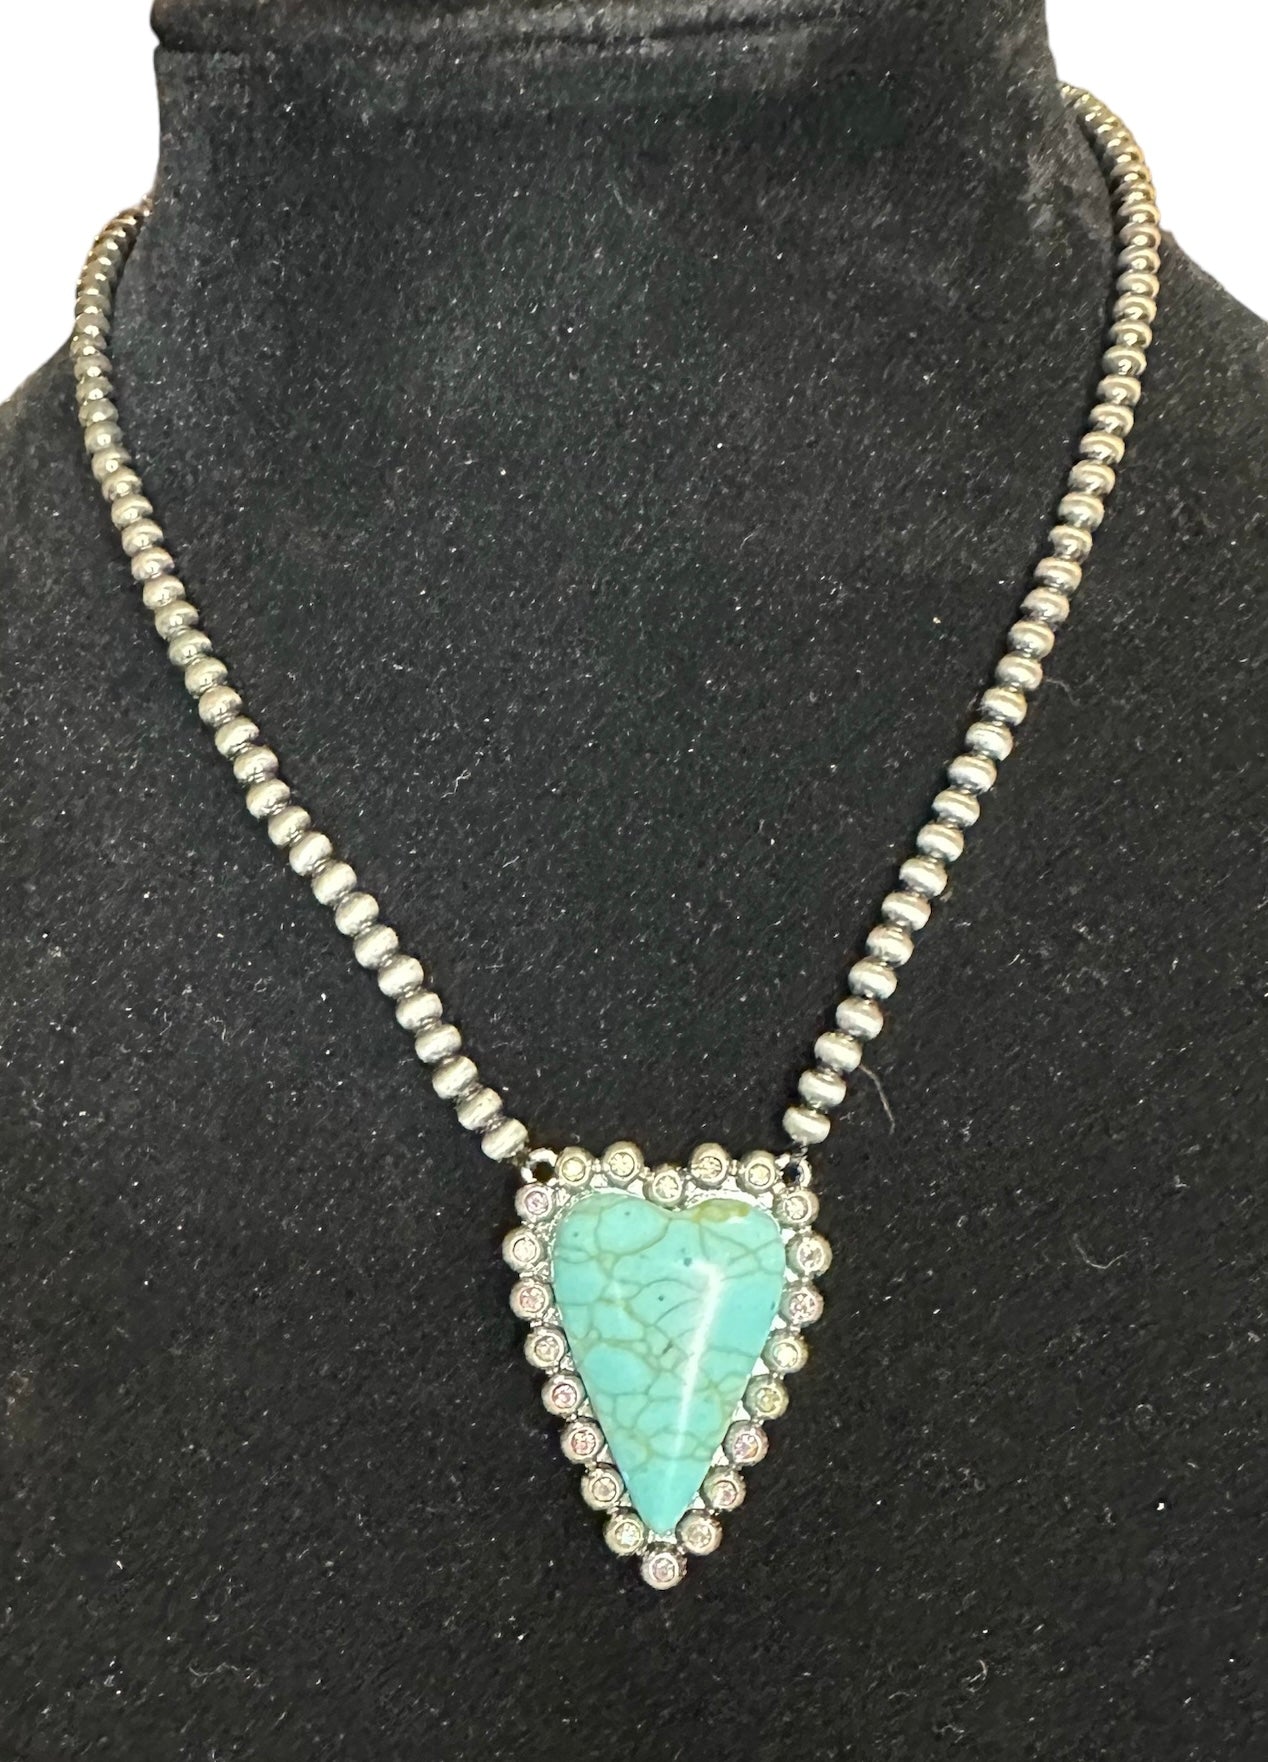 Heart Necklace with Iridescent Rhinestones